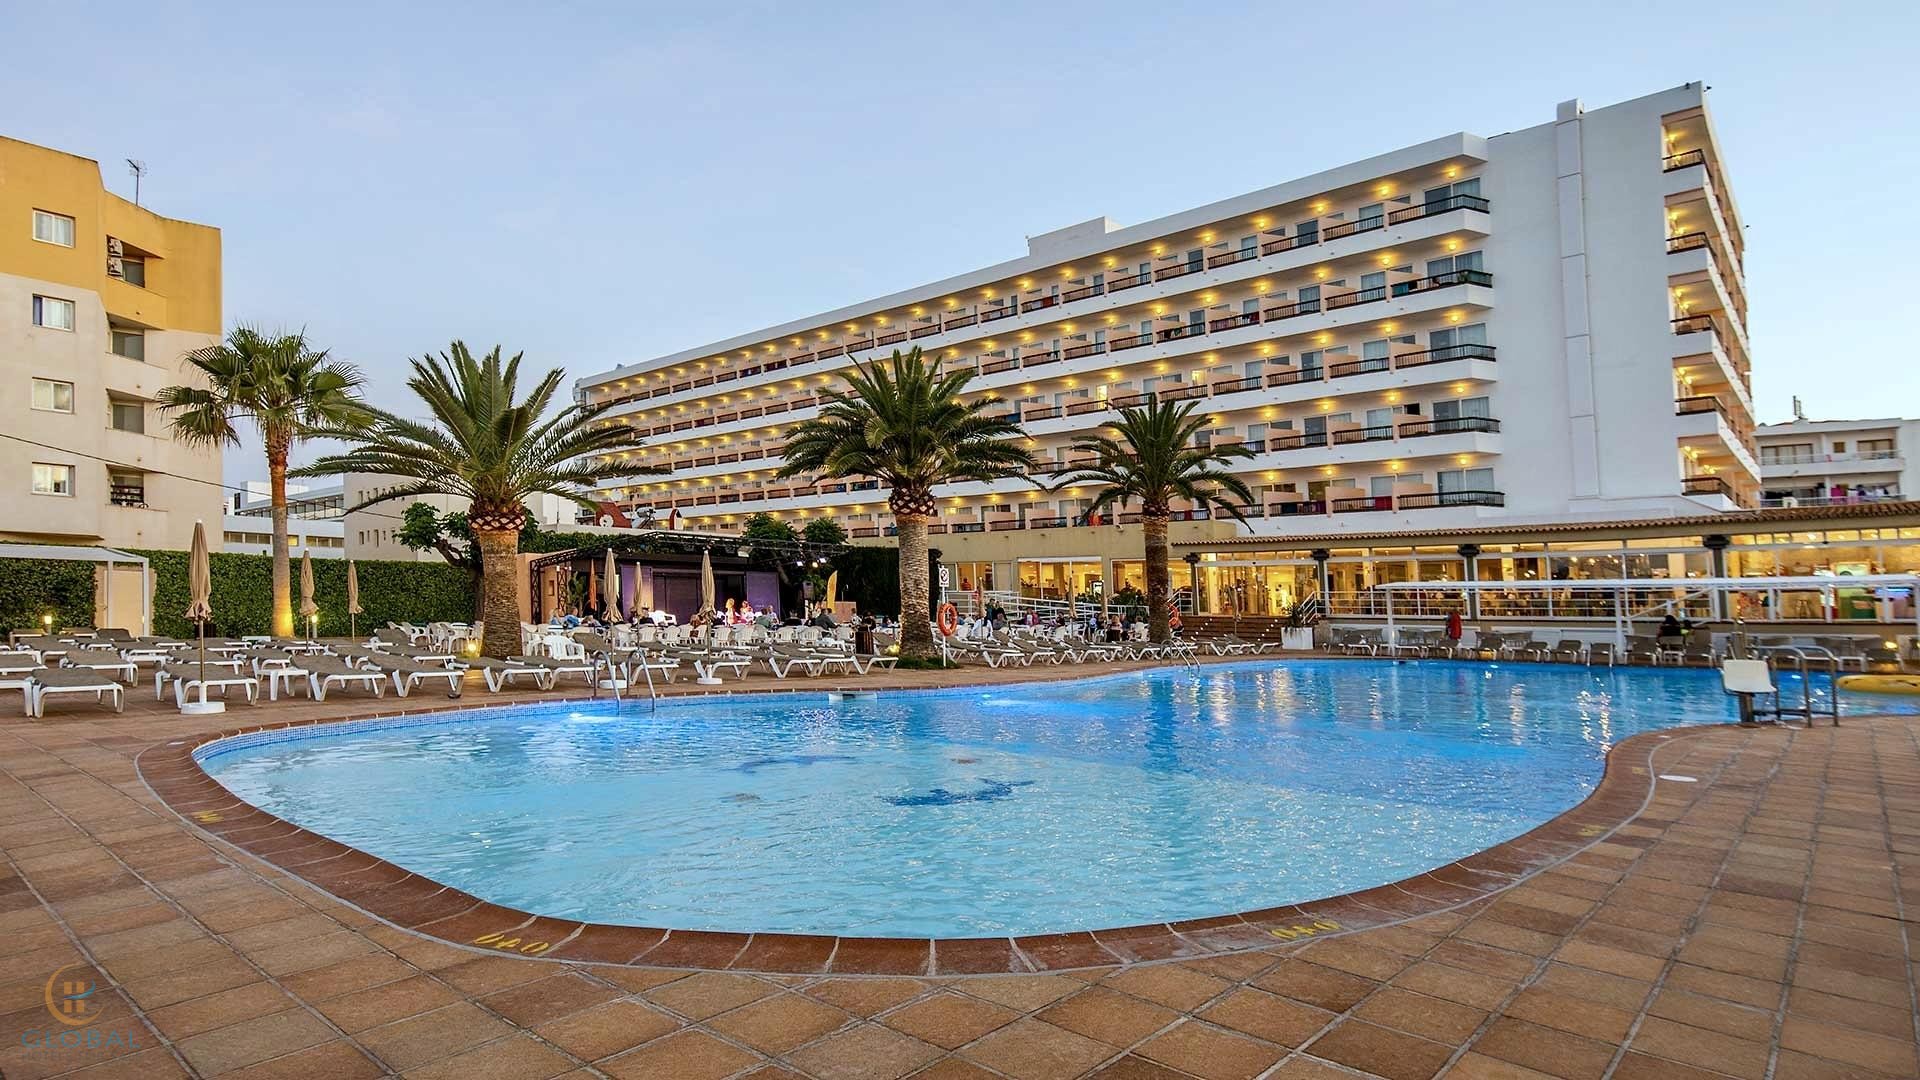 Fantastic 4* Hotel for sale in Ibiza